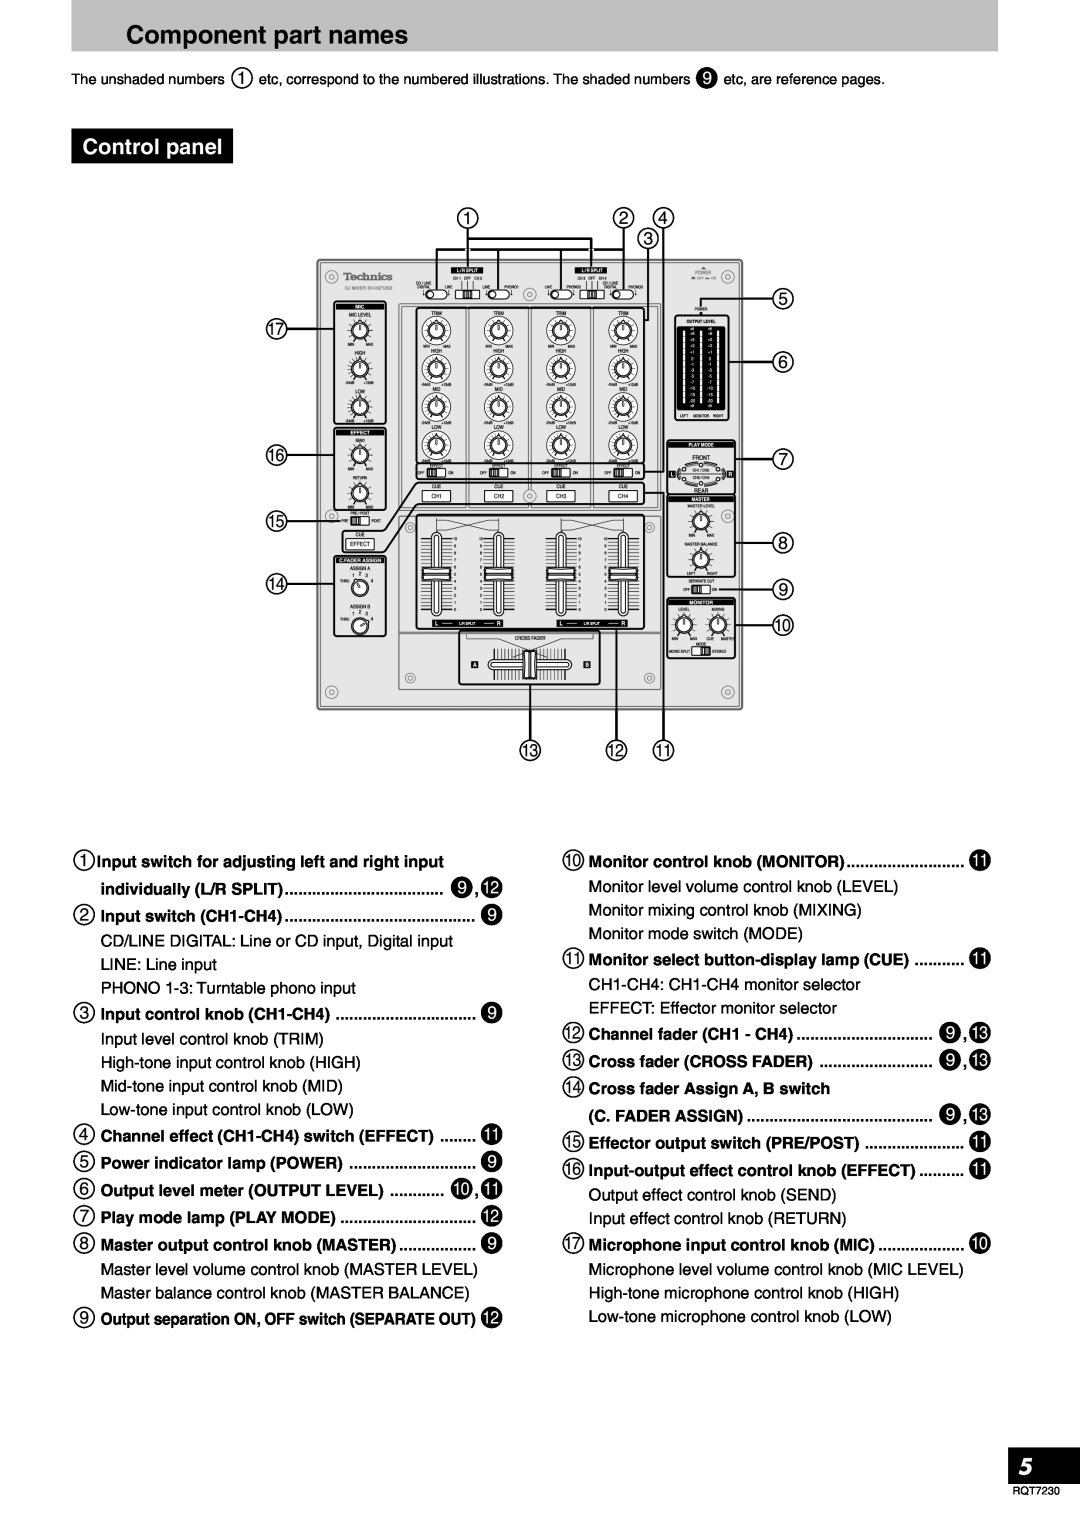 Panasonic SH-MZ1200, RQT7230-3Y operating instructions Component part names, Control panel 